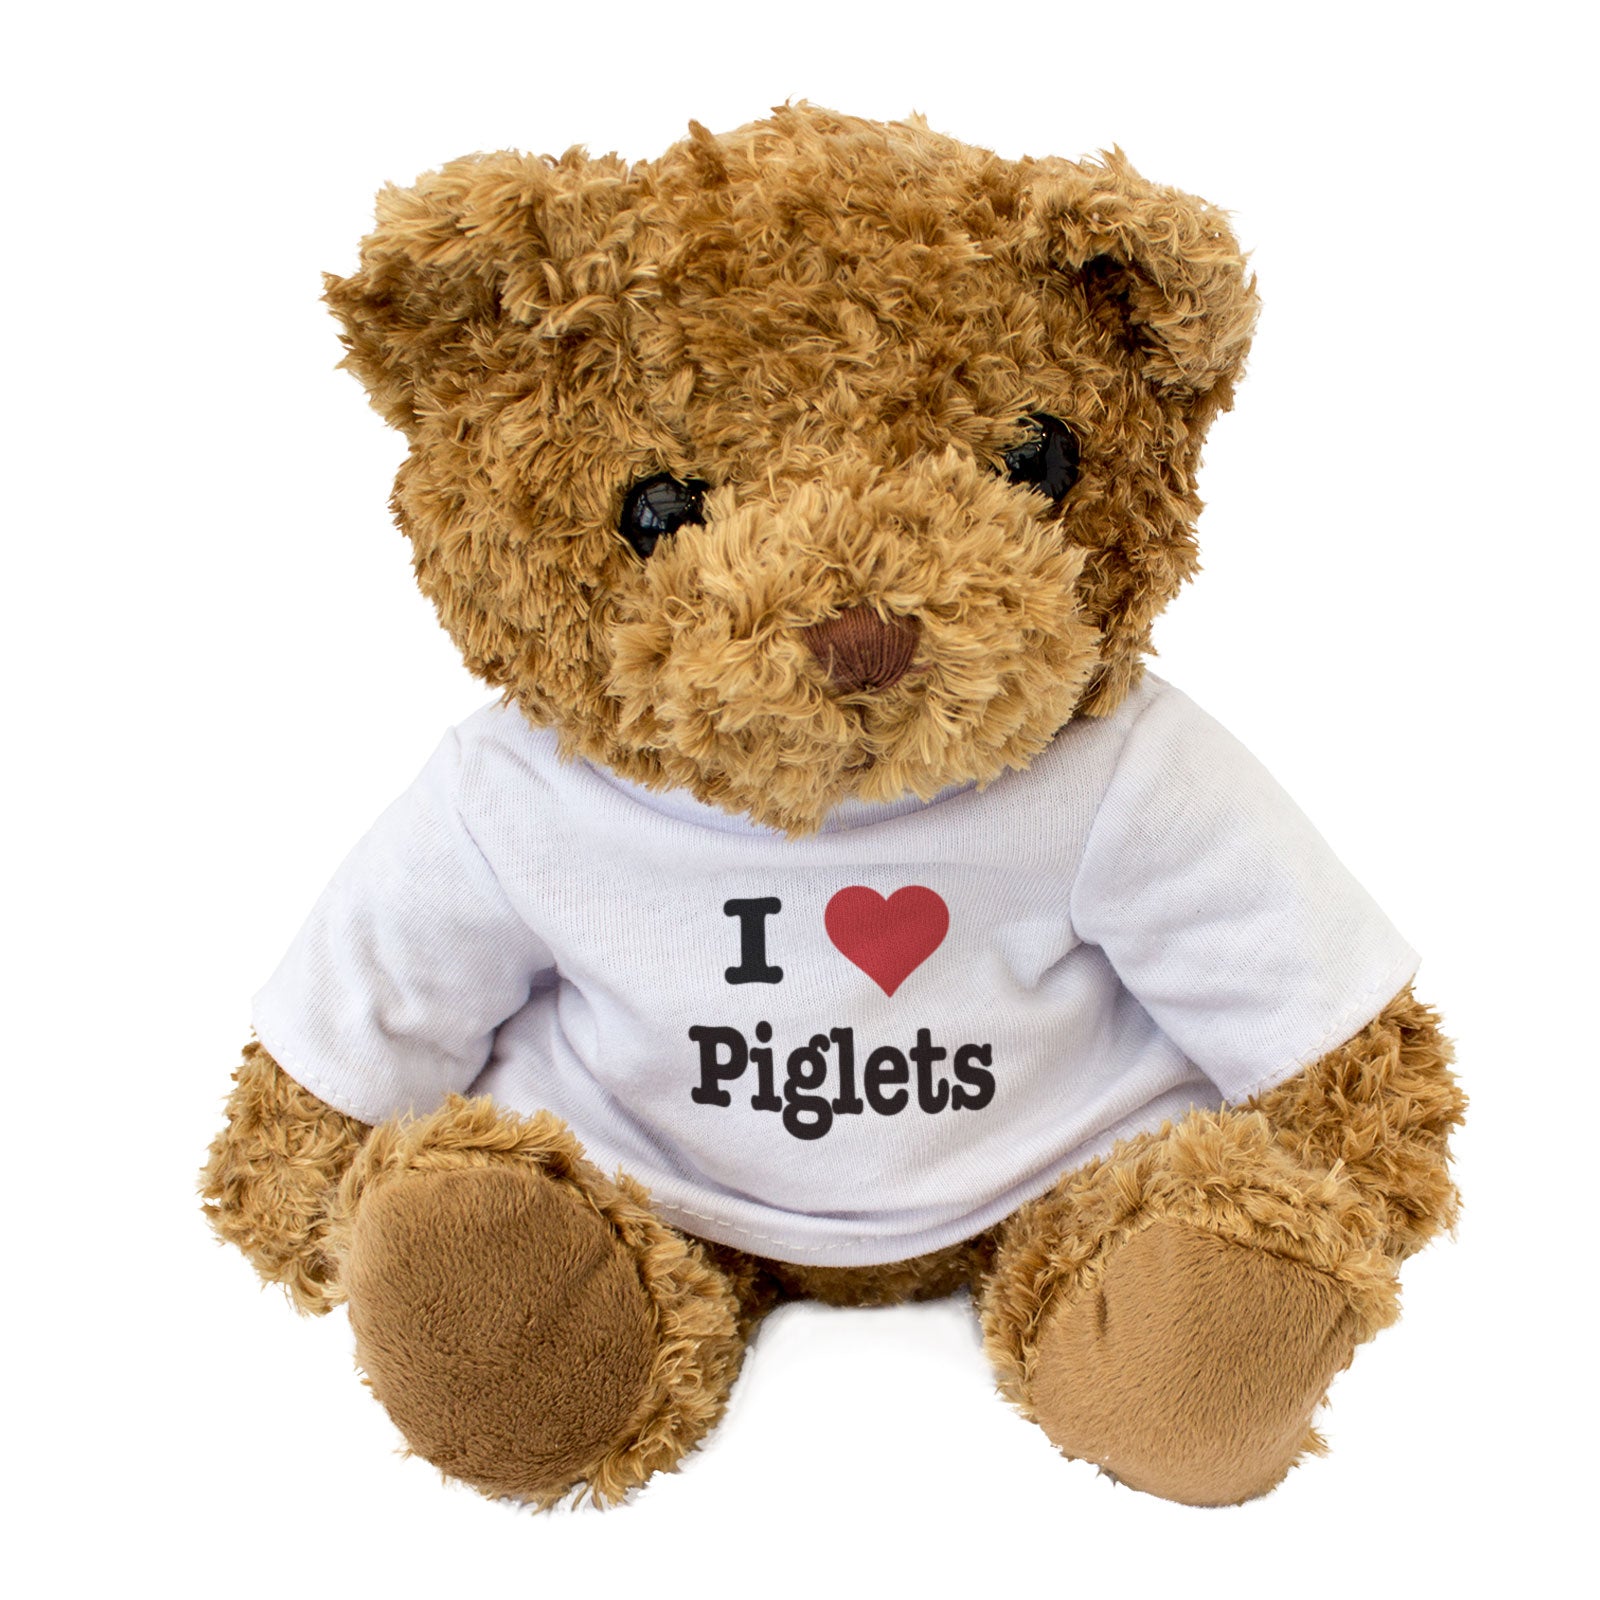 I Love Piglets - Teddy Bear